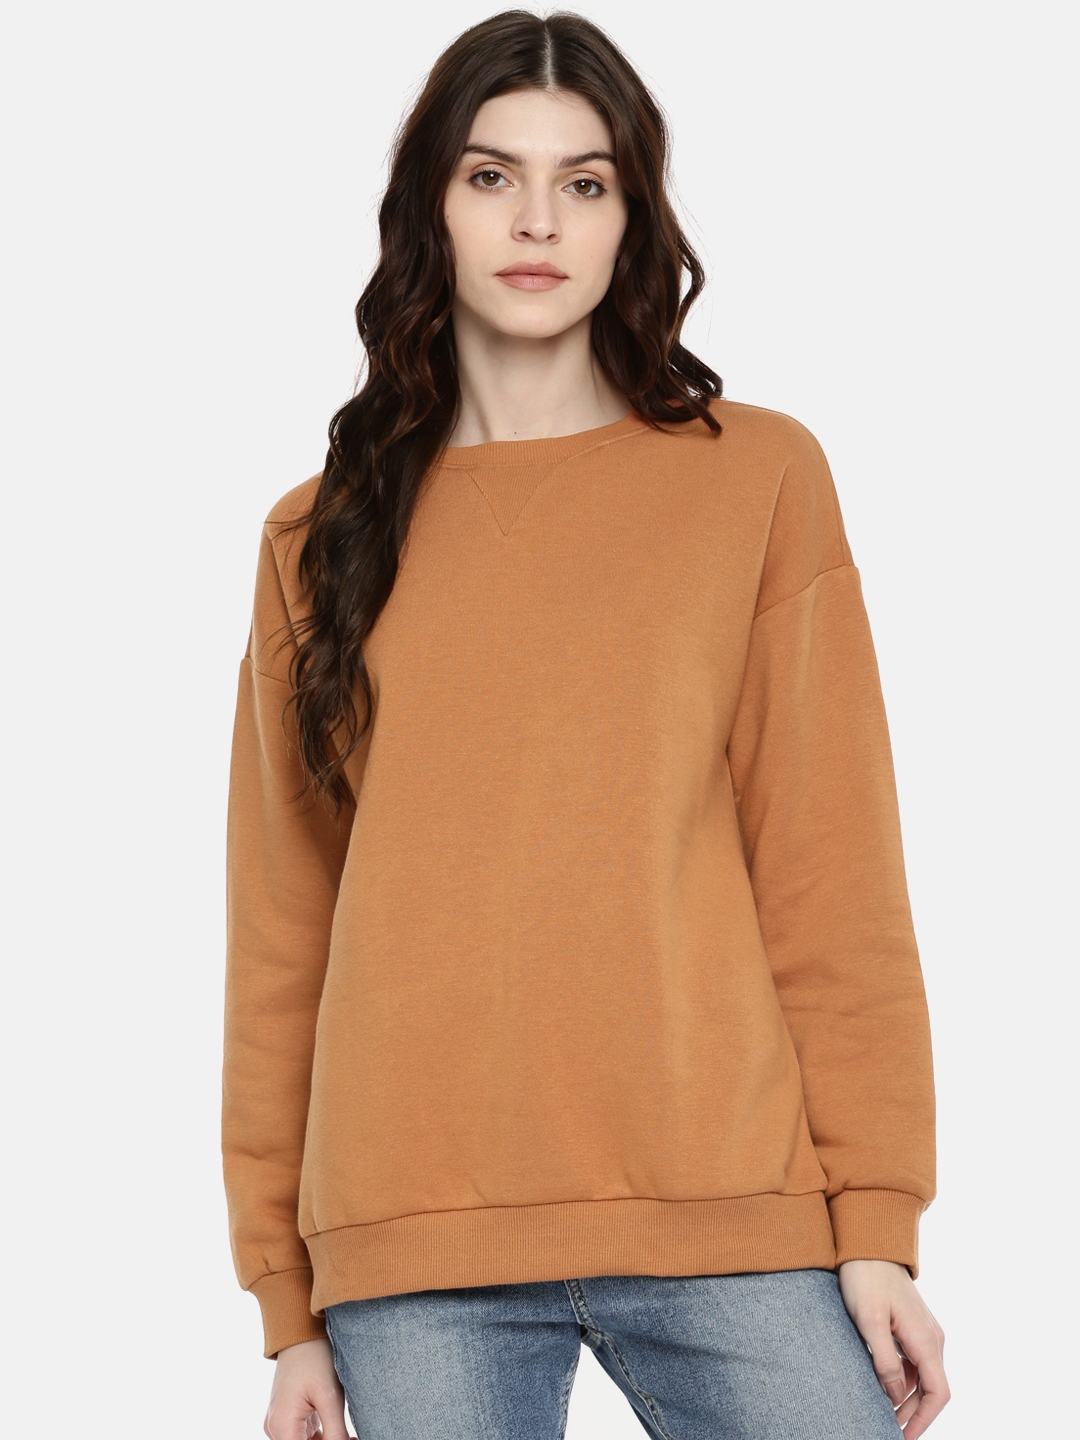 Buy FOREVER 21 Women Brown Solid Sweatshirt - Sweatshirts for Women ...